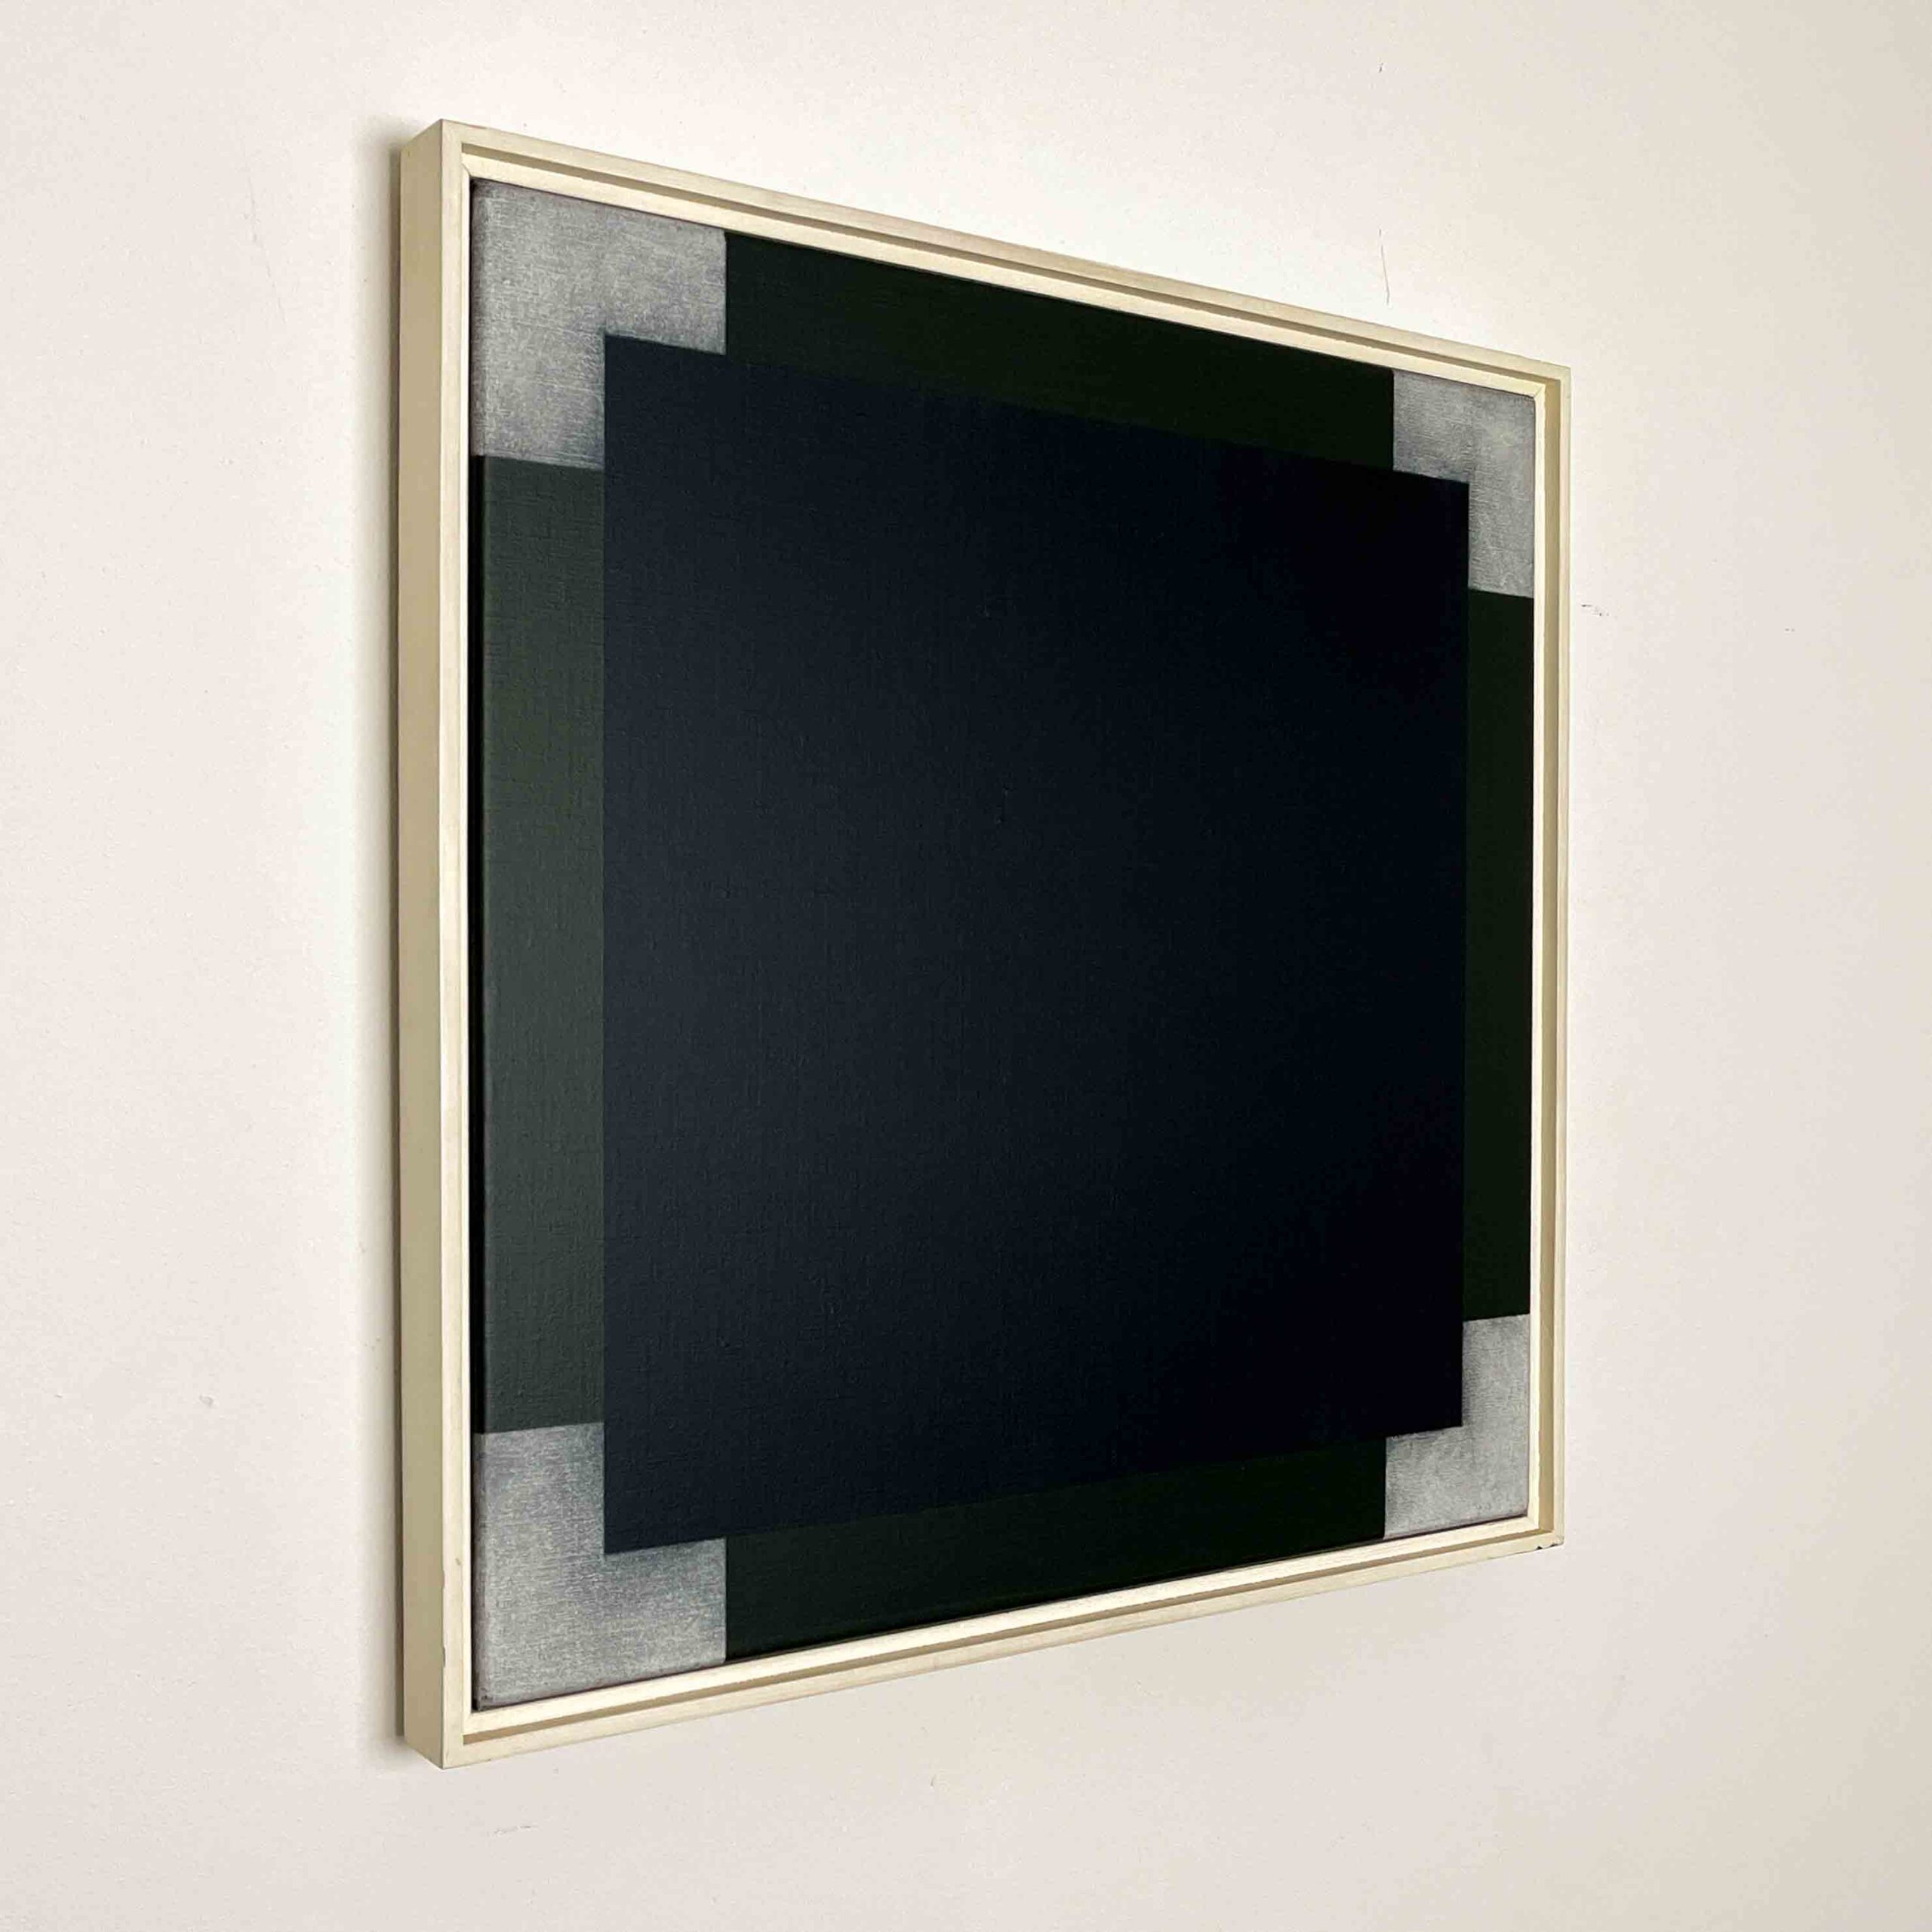 Geert van Fastenhout - "Painting no. 5", 1988 - oil on linnen, framed